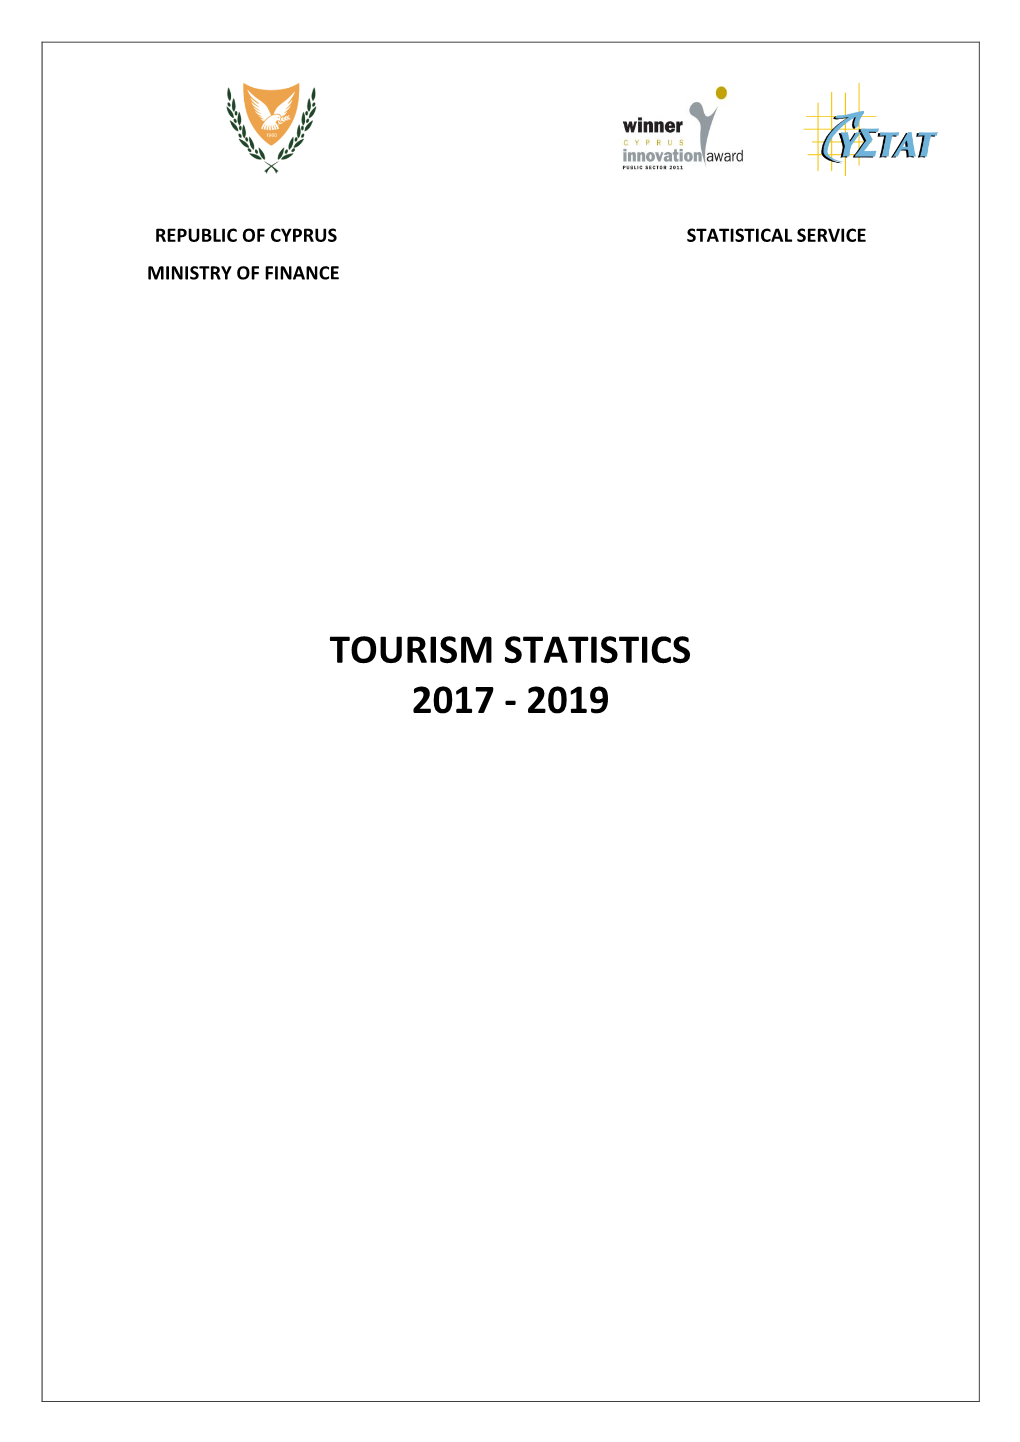 Tourism Statistics 2017 - 2019